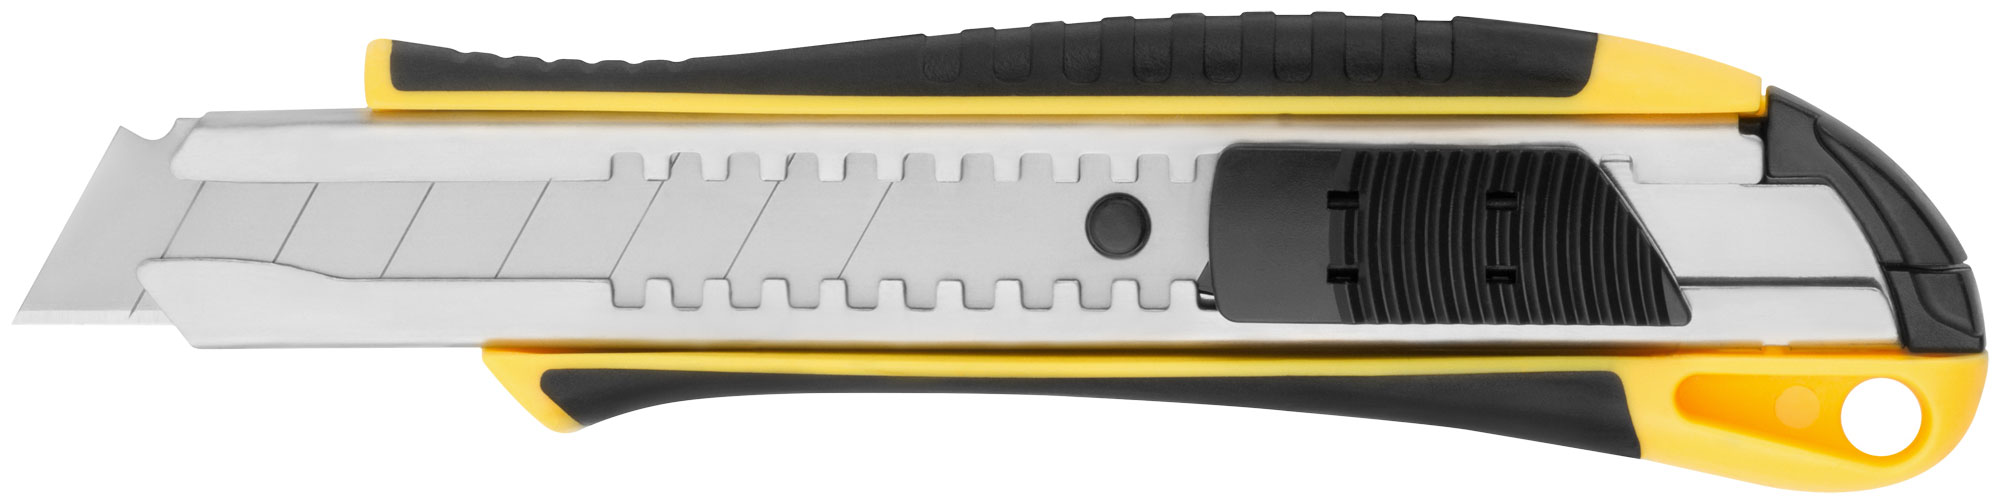 FIT IT  Нож технический 18 мм усиленный прорезиненный, 2-х сторонняя автофиксация нож технический курс тренд 10174 18 мм усиленный прорезиненный